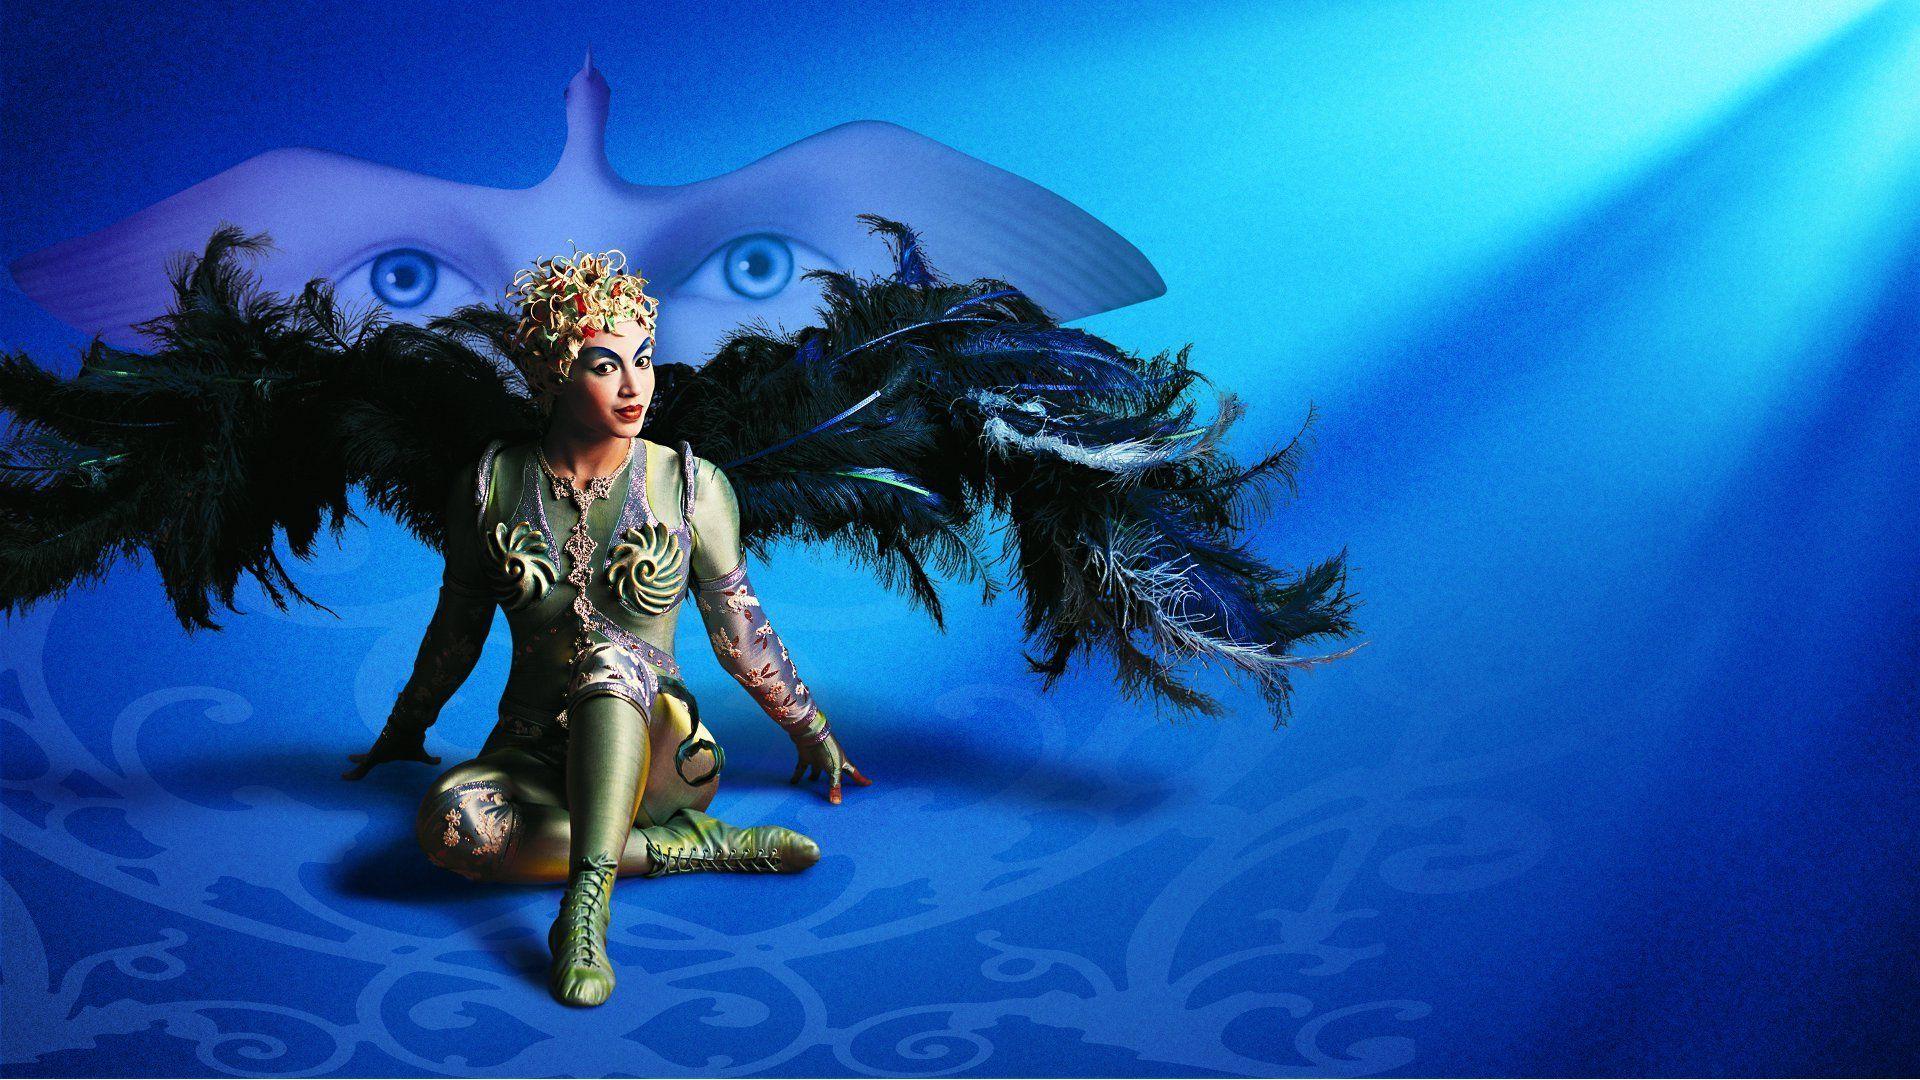 Cirque du Soleil image Alegria HD wallpaper and background photo